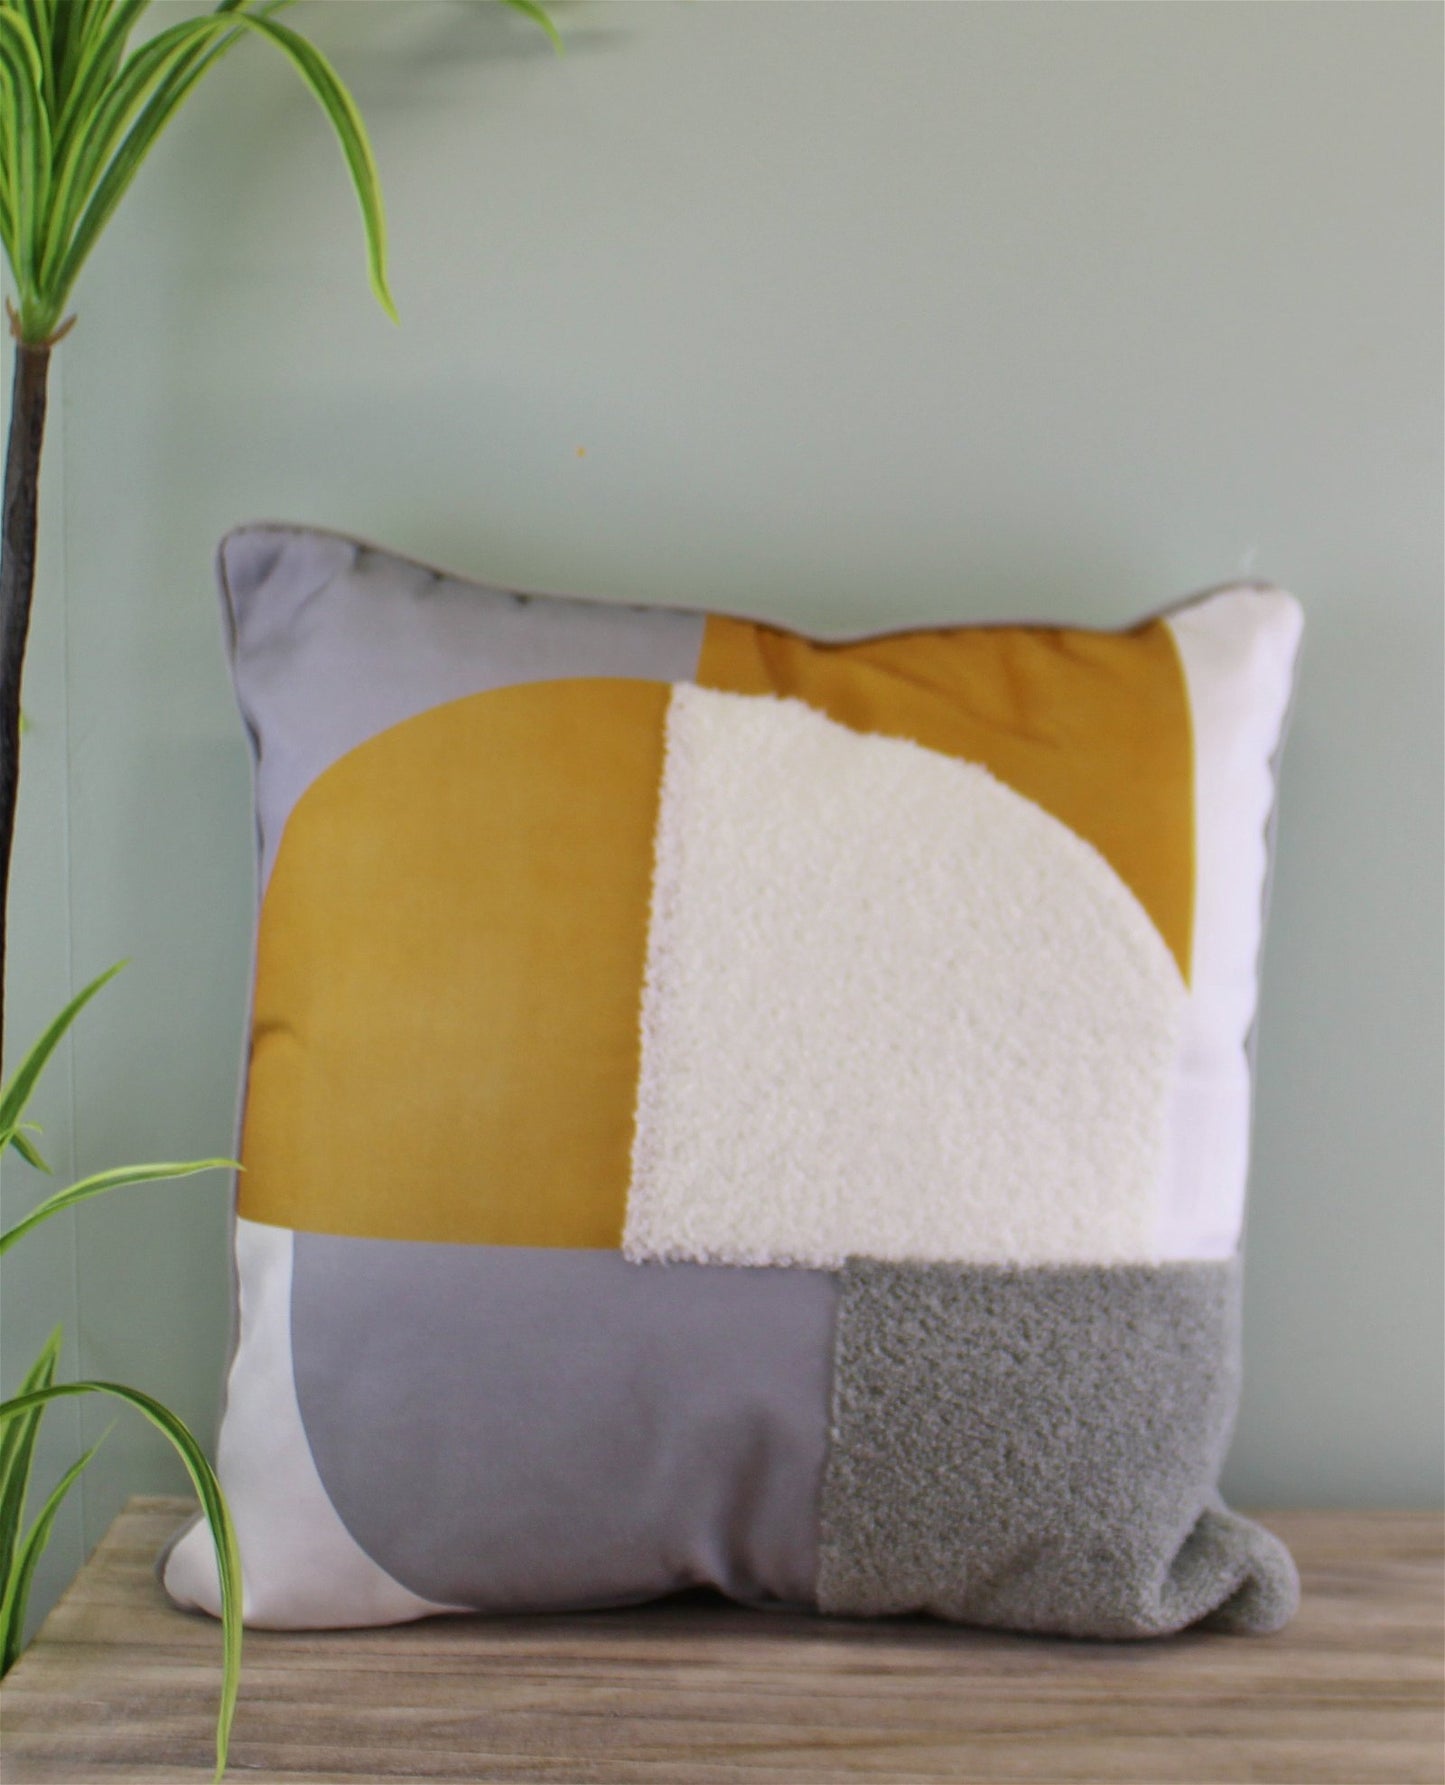 Abstract Design Textured Cushion, Design A - a Cheeky Plant